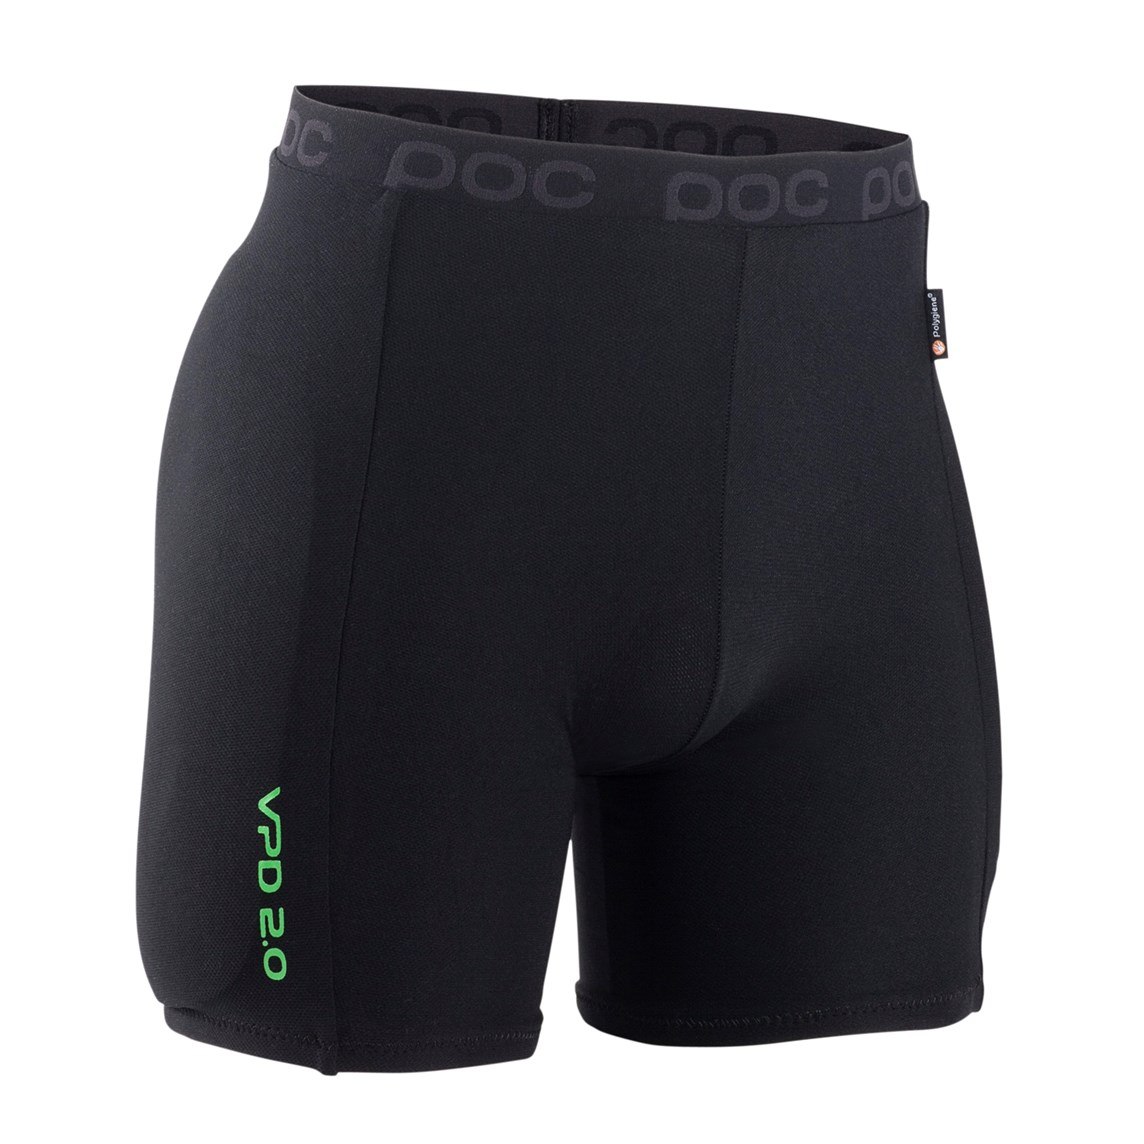 Produktbild von POC Hip VPD 2.0 Shorts Protektorenhose - 9002 black